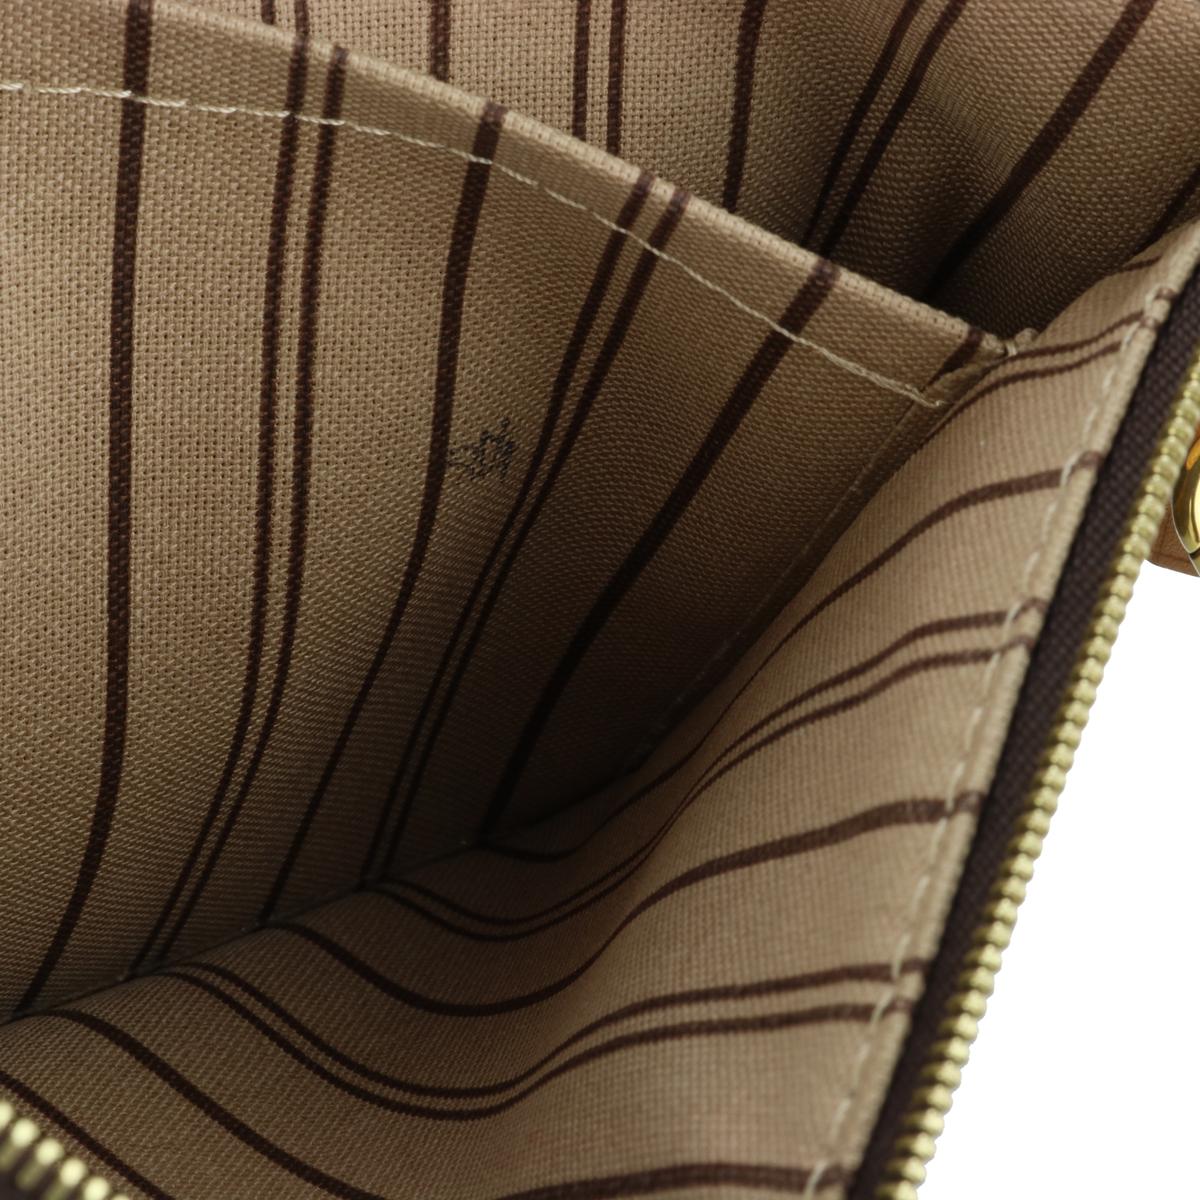 Louis Vuitton Neverfull MM Pochette Pouch in Monogram with Beige Interior 2016 10